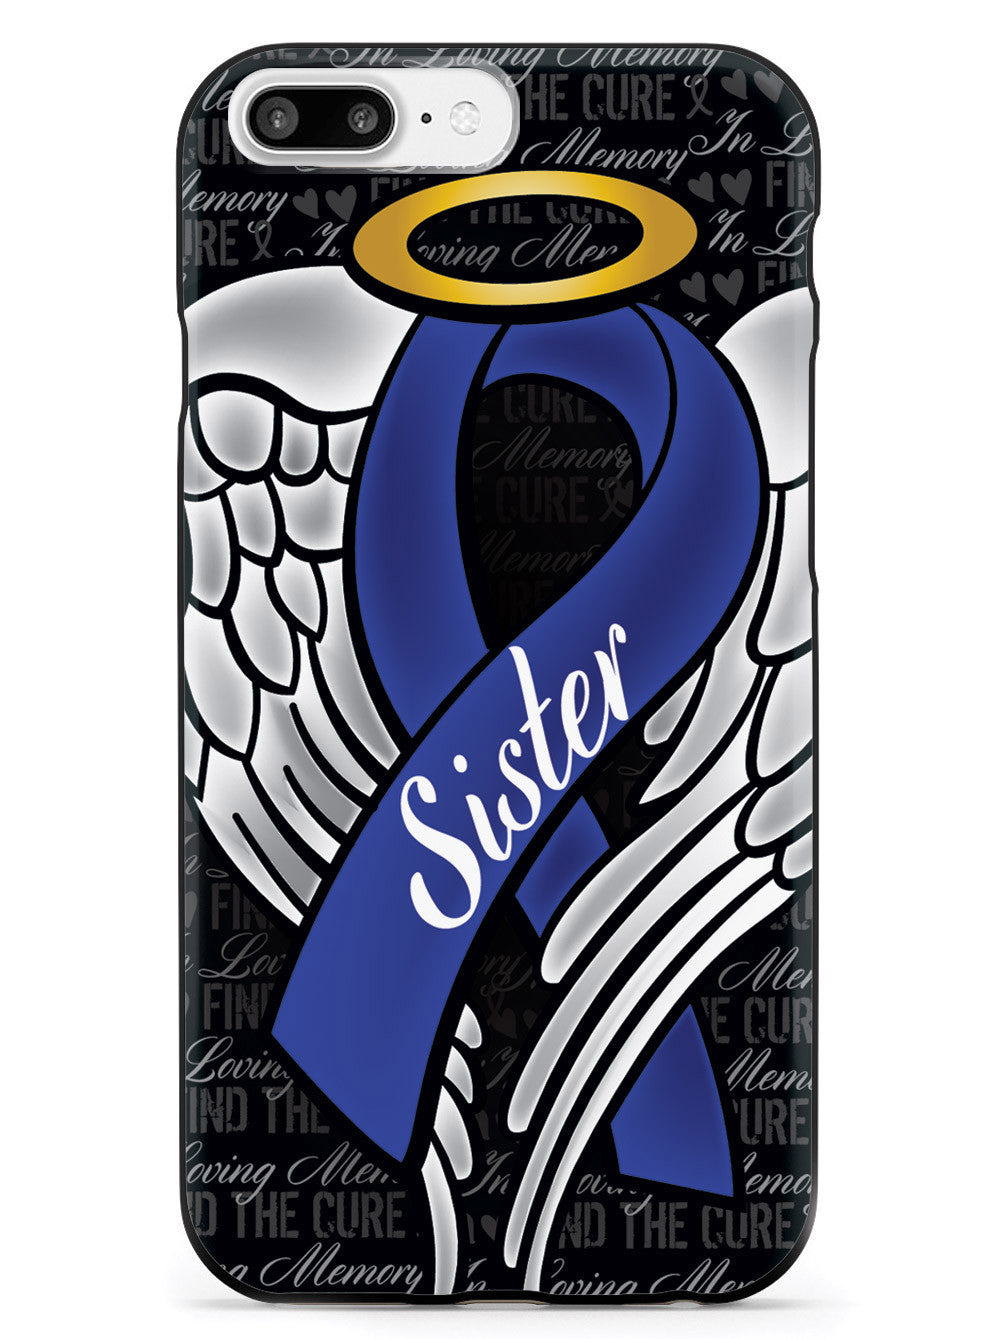 In Loving Memory of My Sister - Blue Ribbon Case